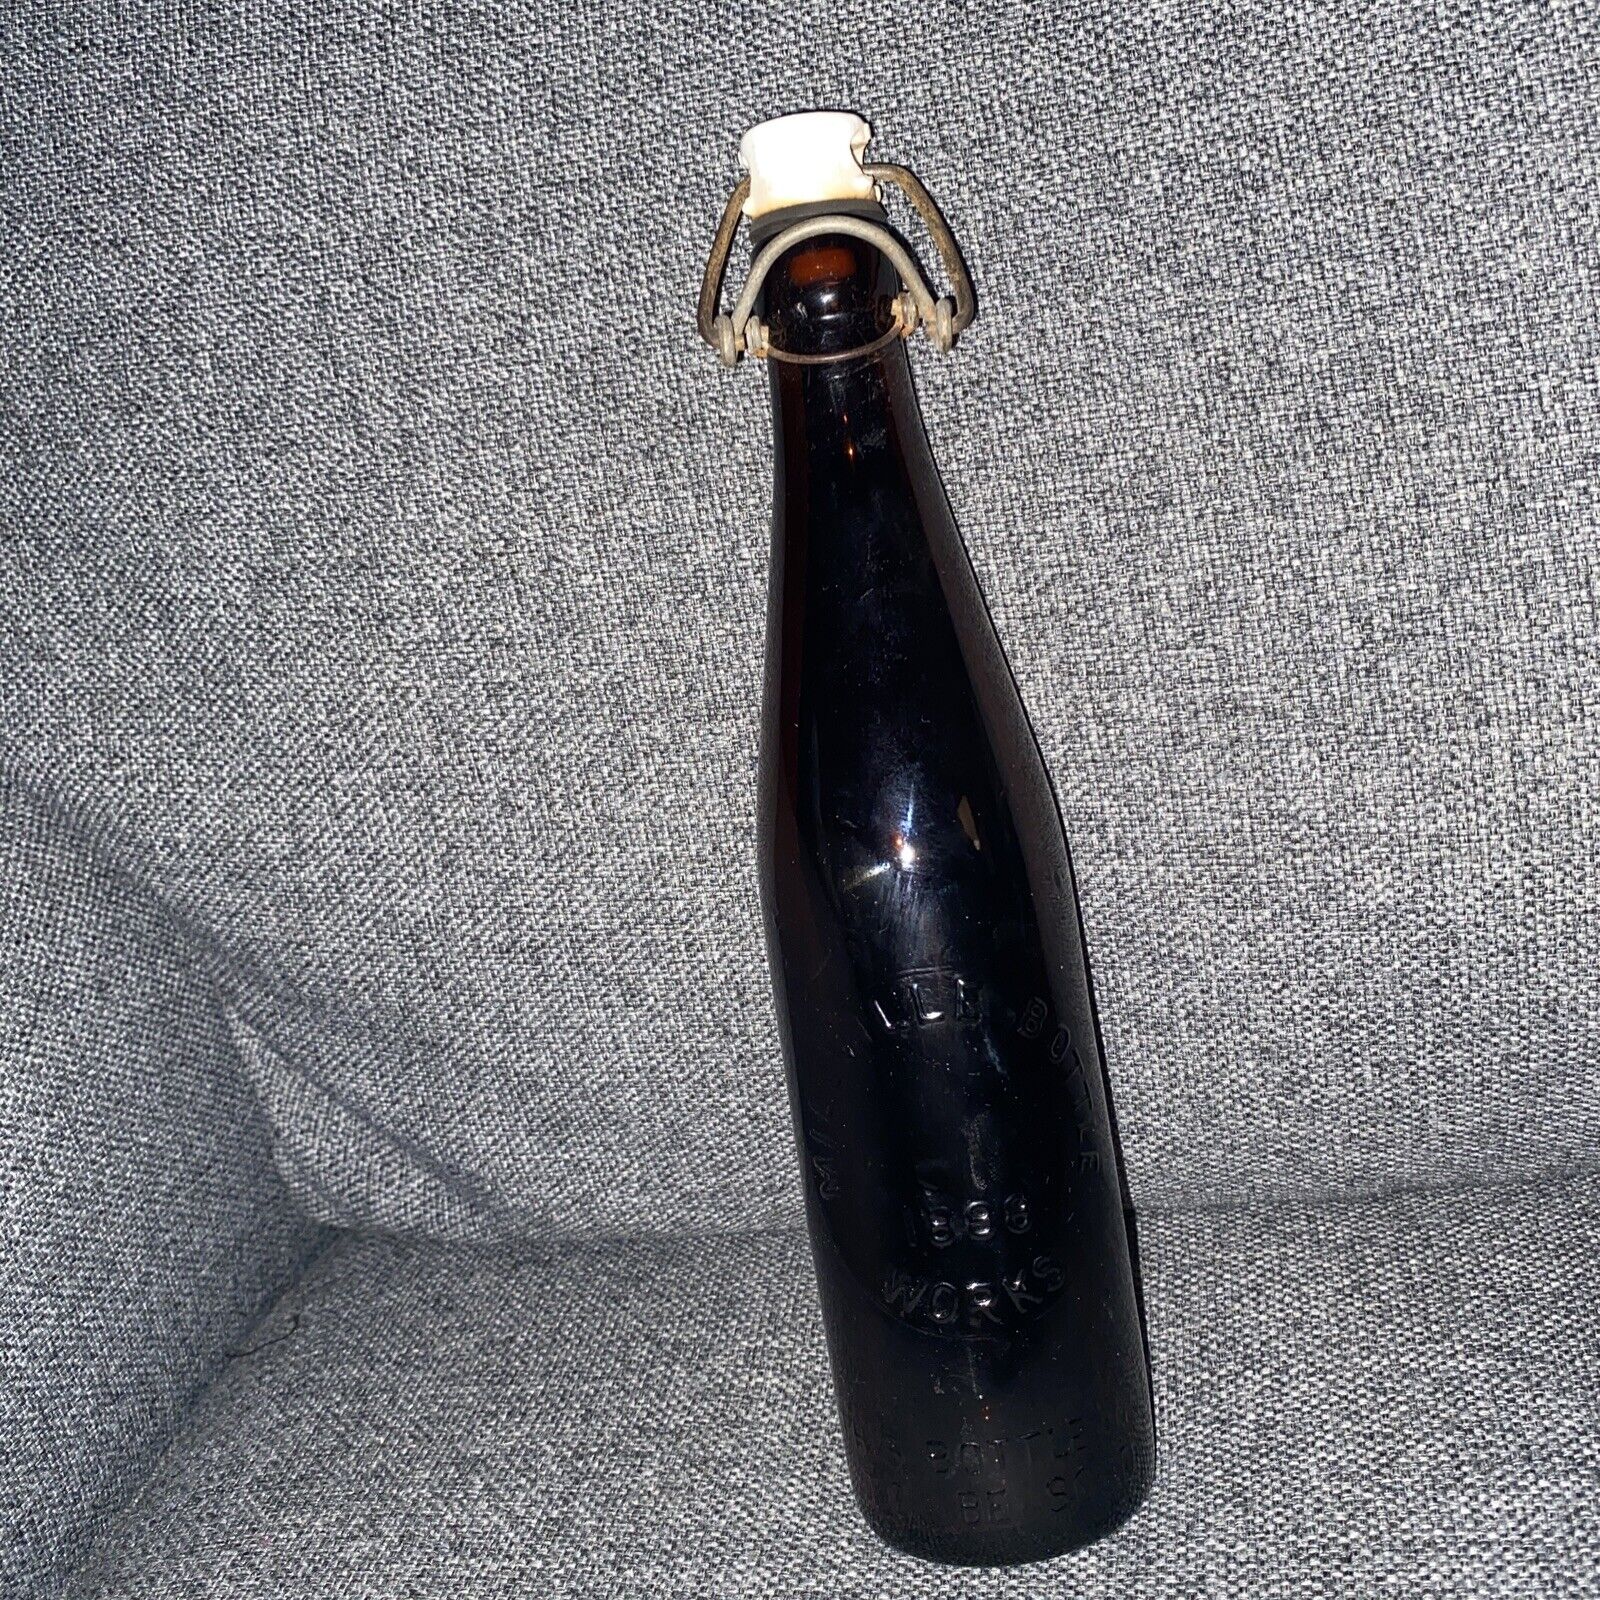 MILLVILLE BOTTLE WORKS - 1888  - Dark Amber / Brown Bottle With Stopper